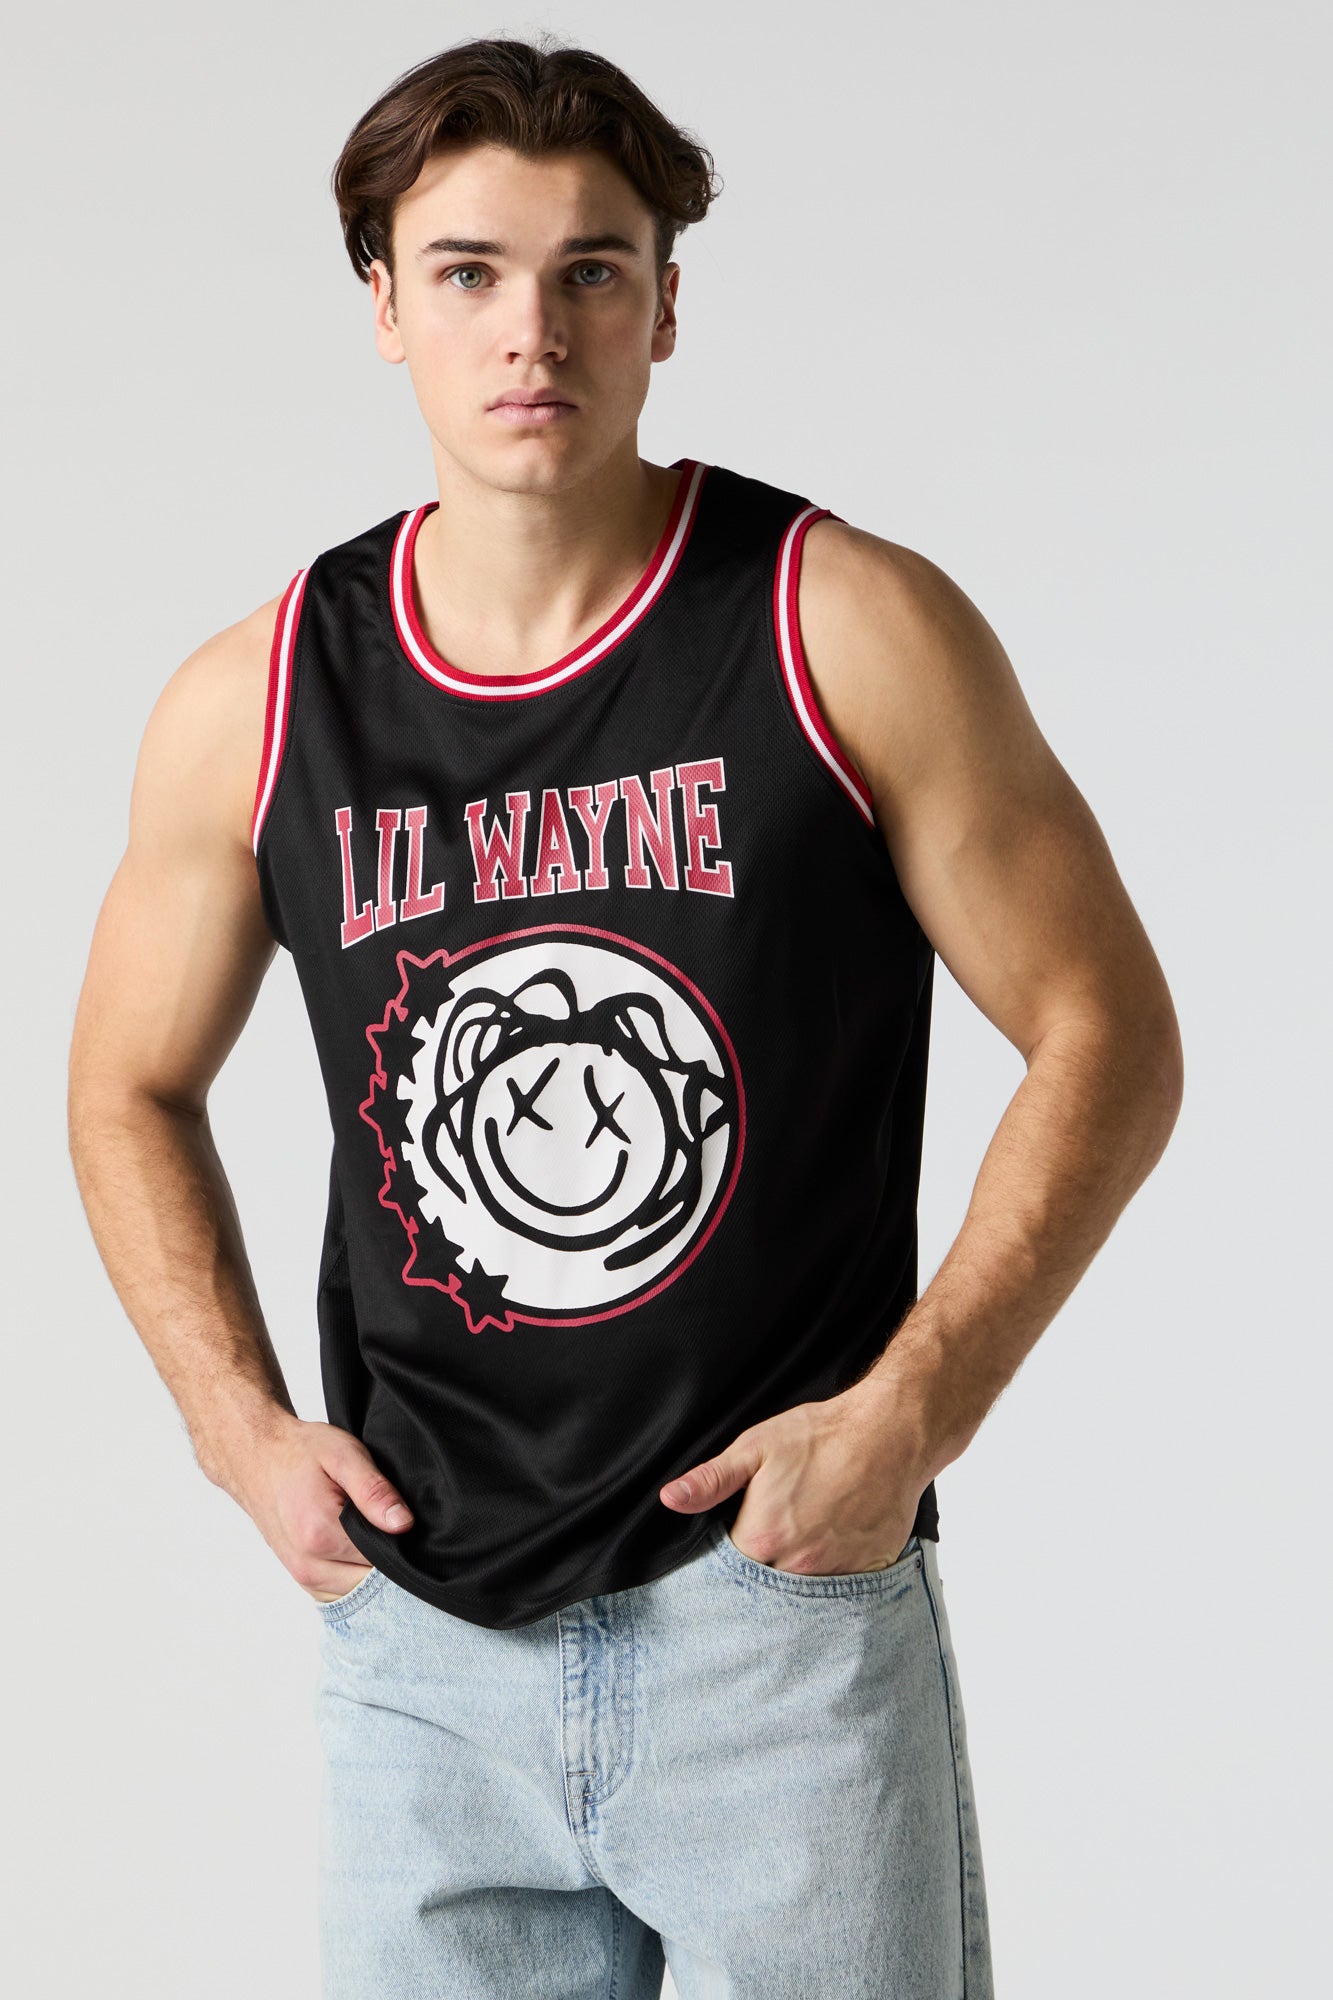 Lil Wayne Graphic Basketball Jersey